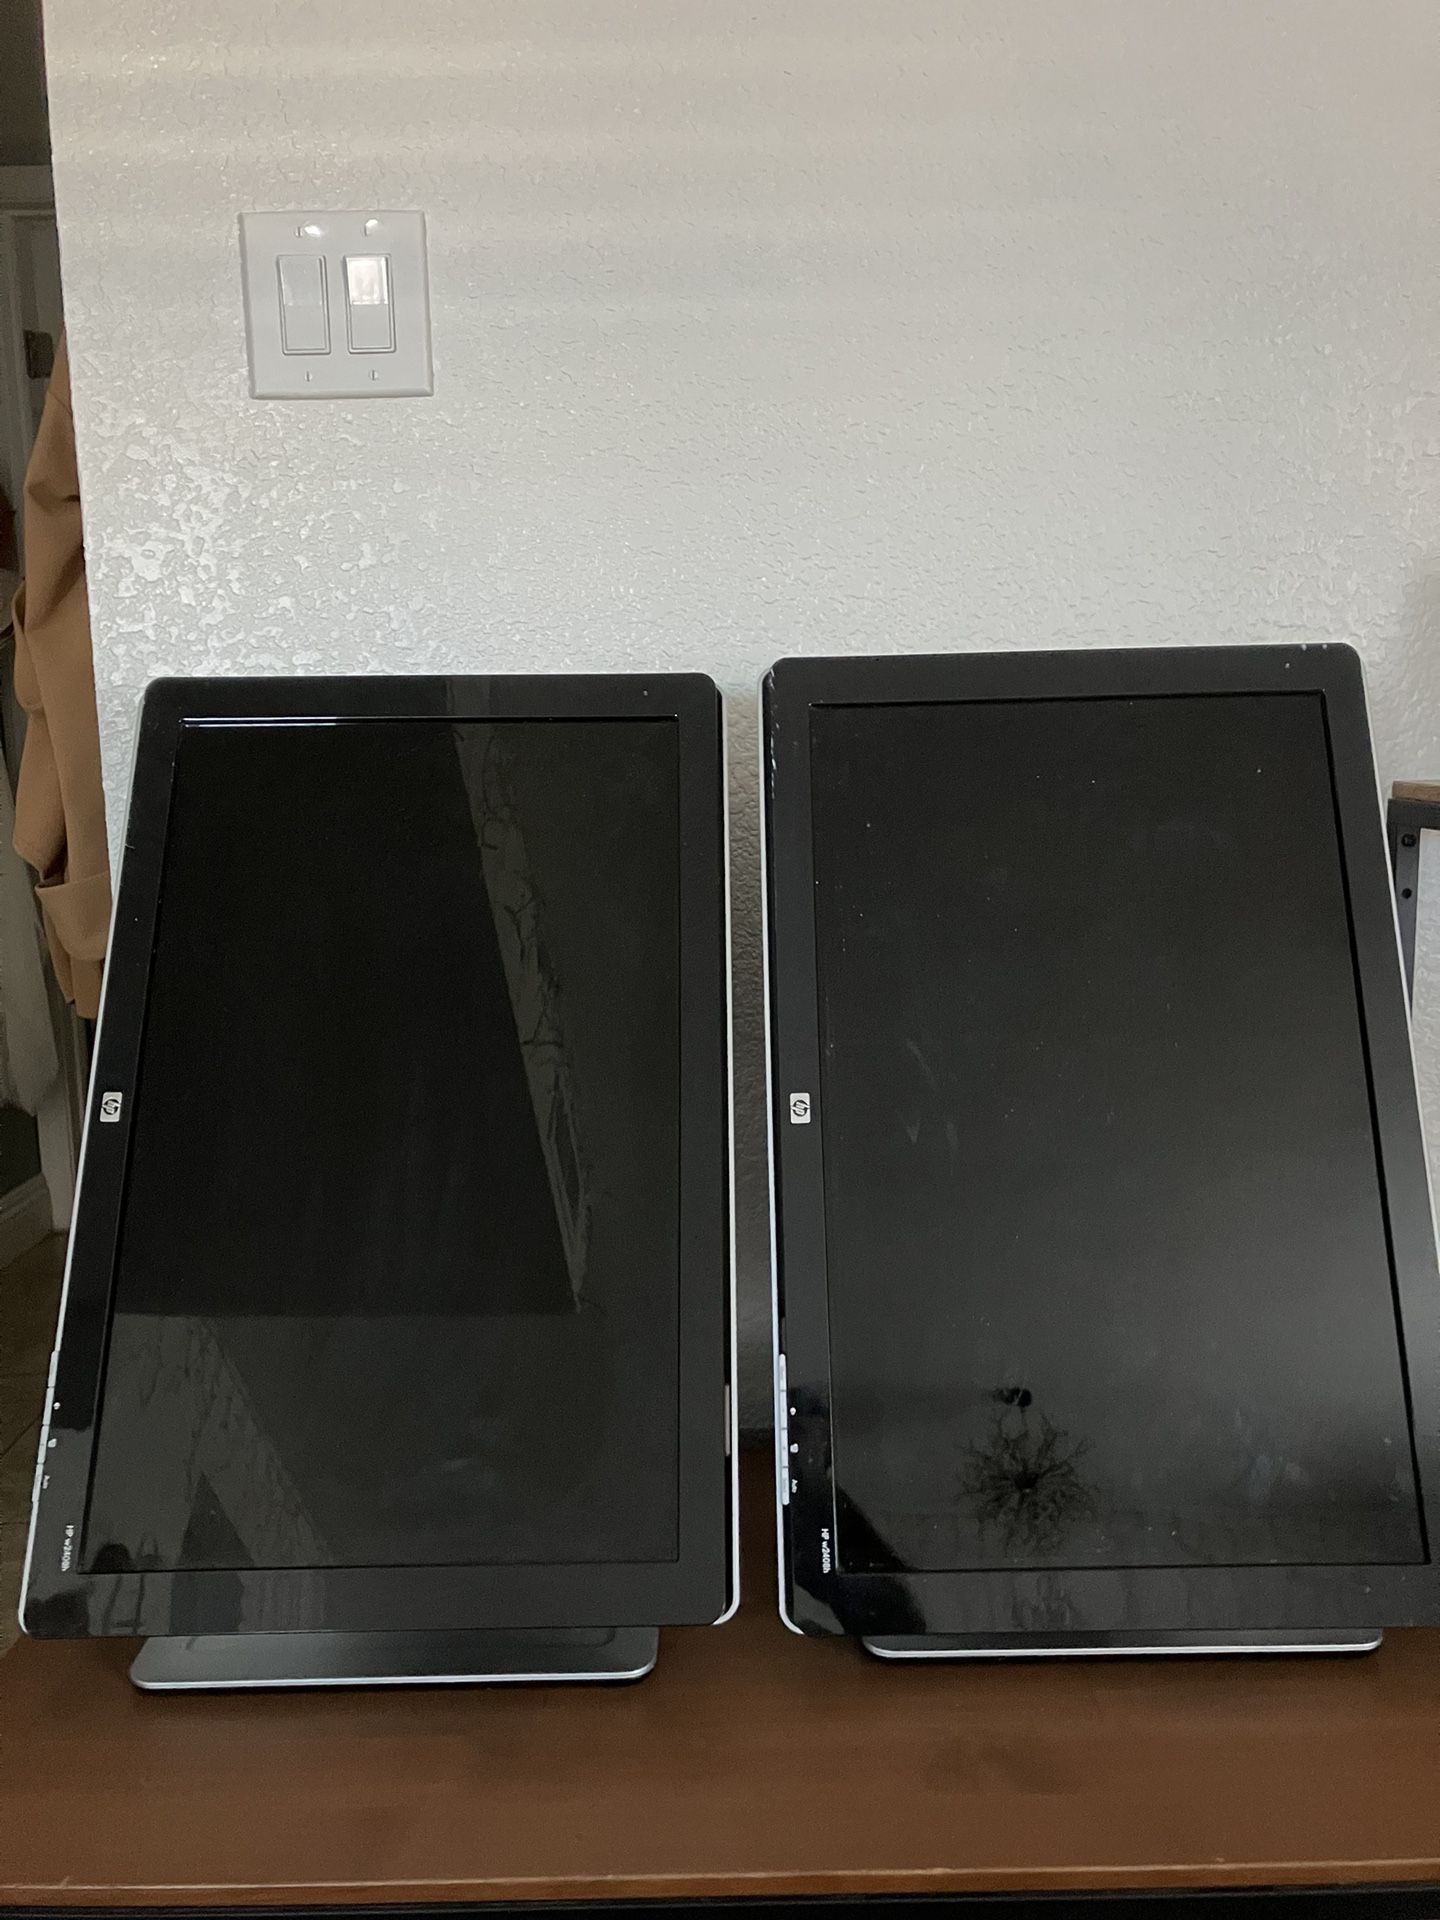 Pair of HP w2408h 24” Monitors